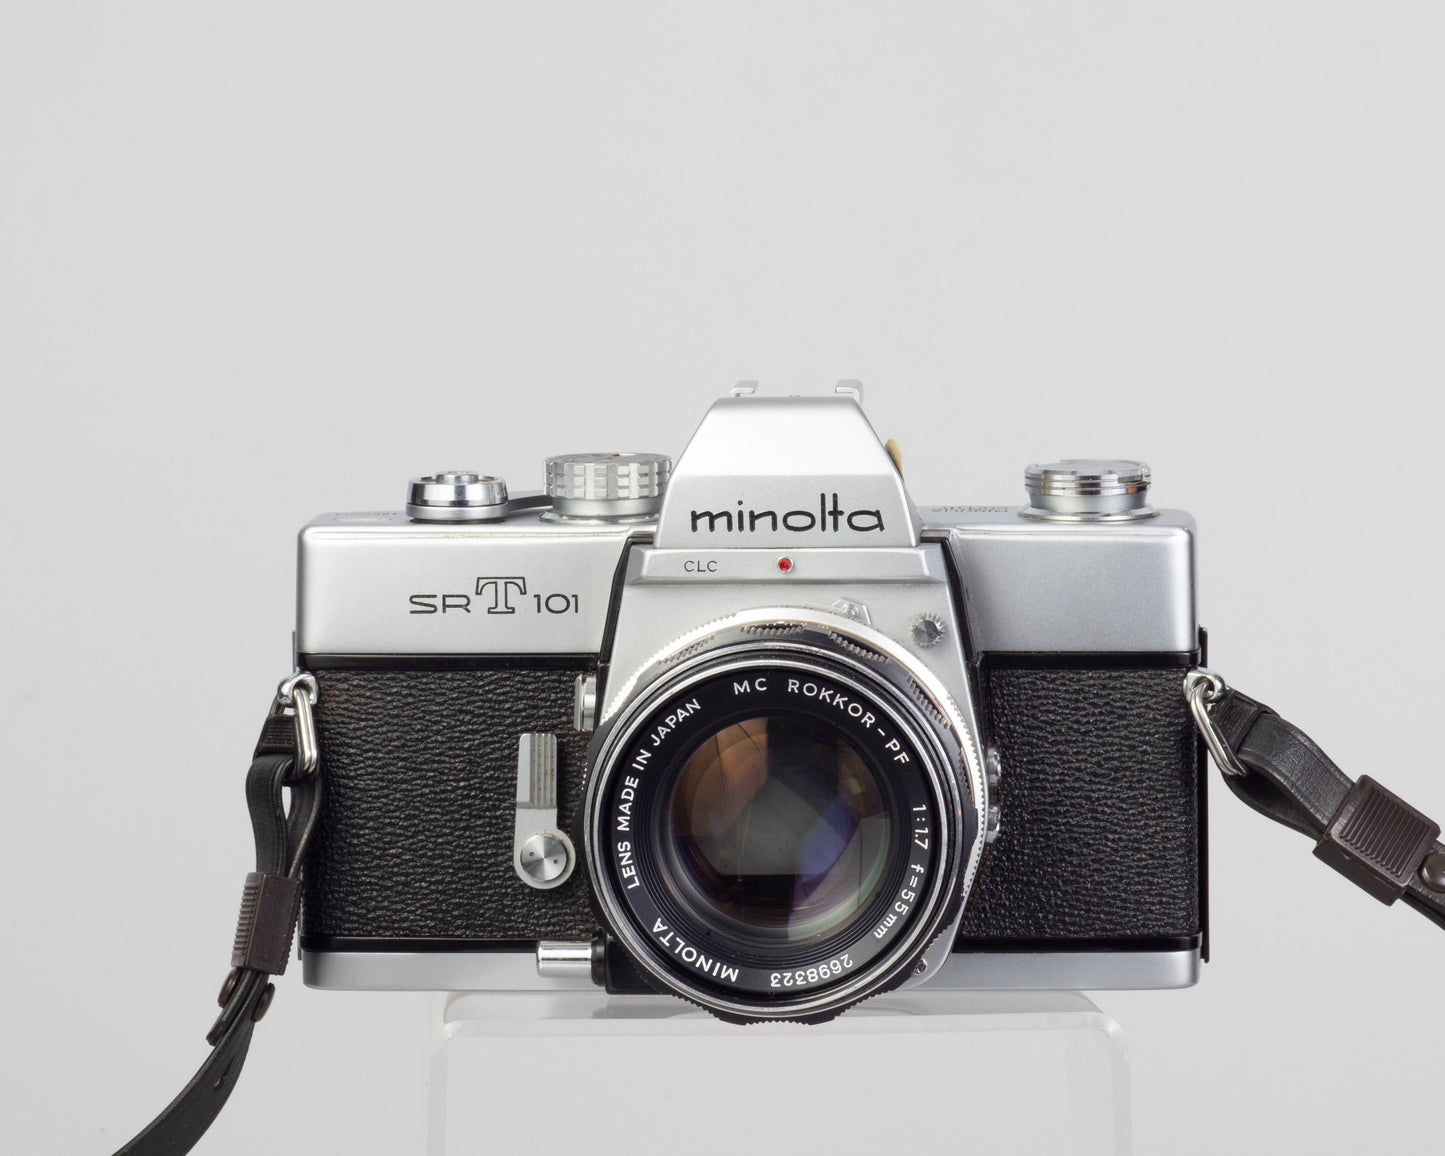 The Minolta SRT 101 with MC Rocker PF 55mm F1.7 lens